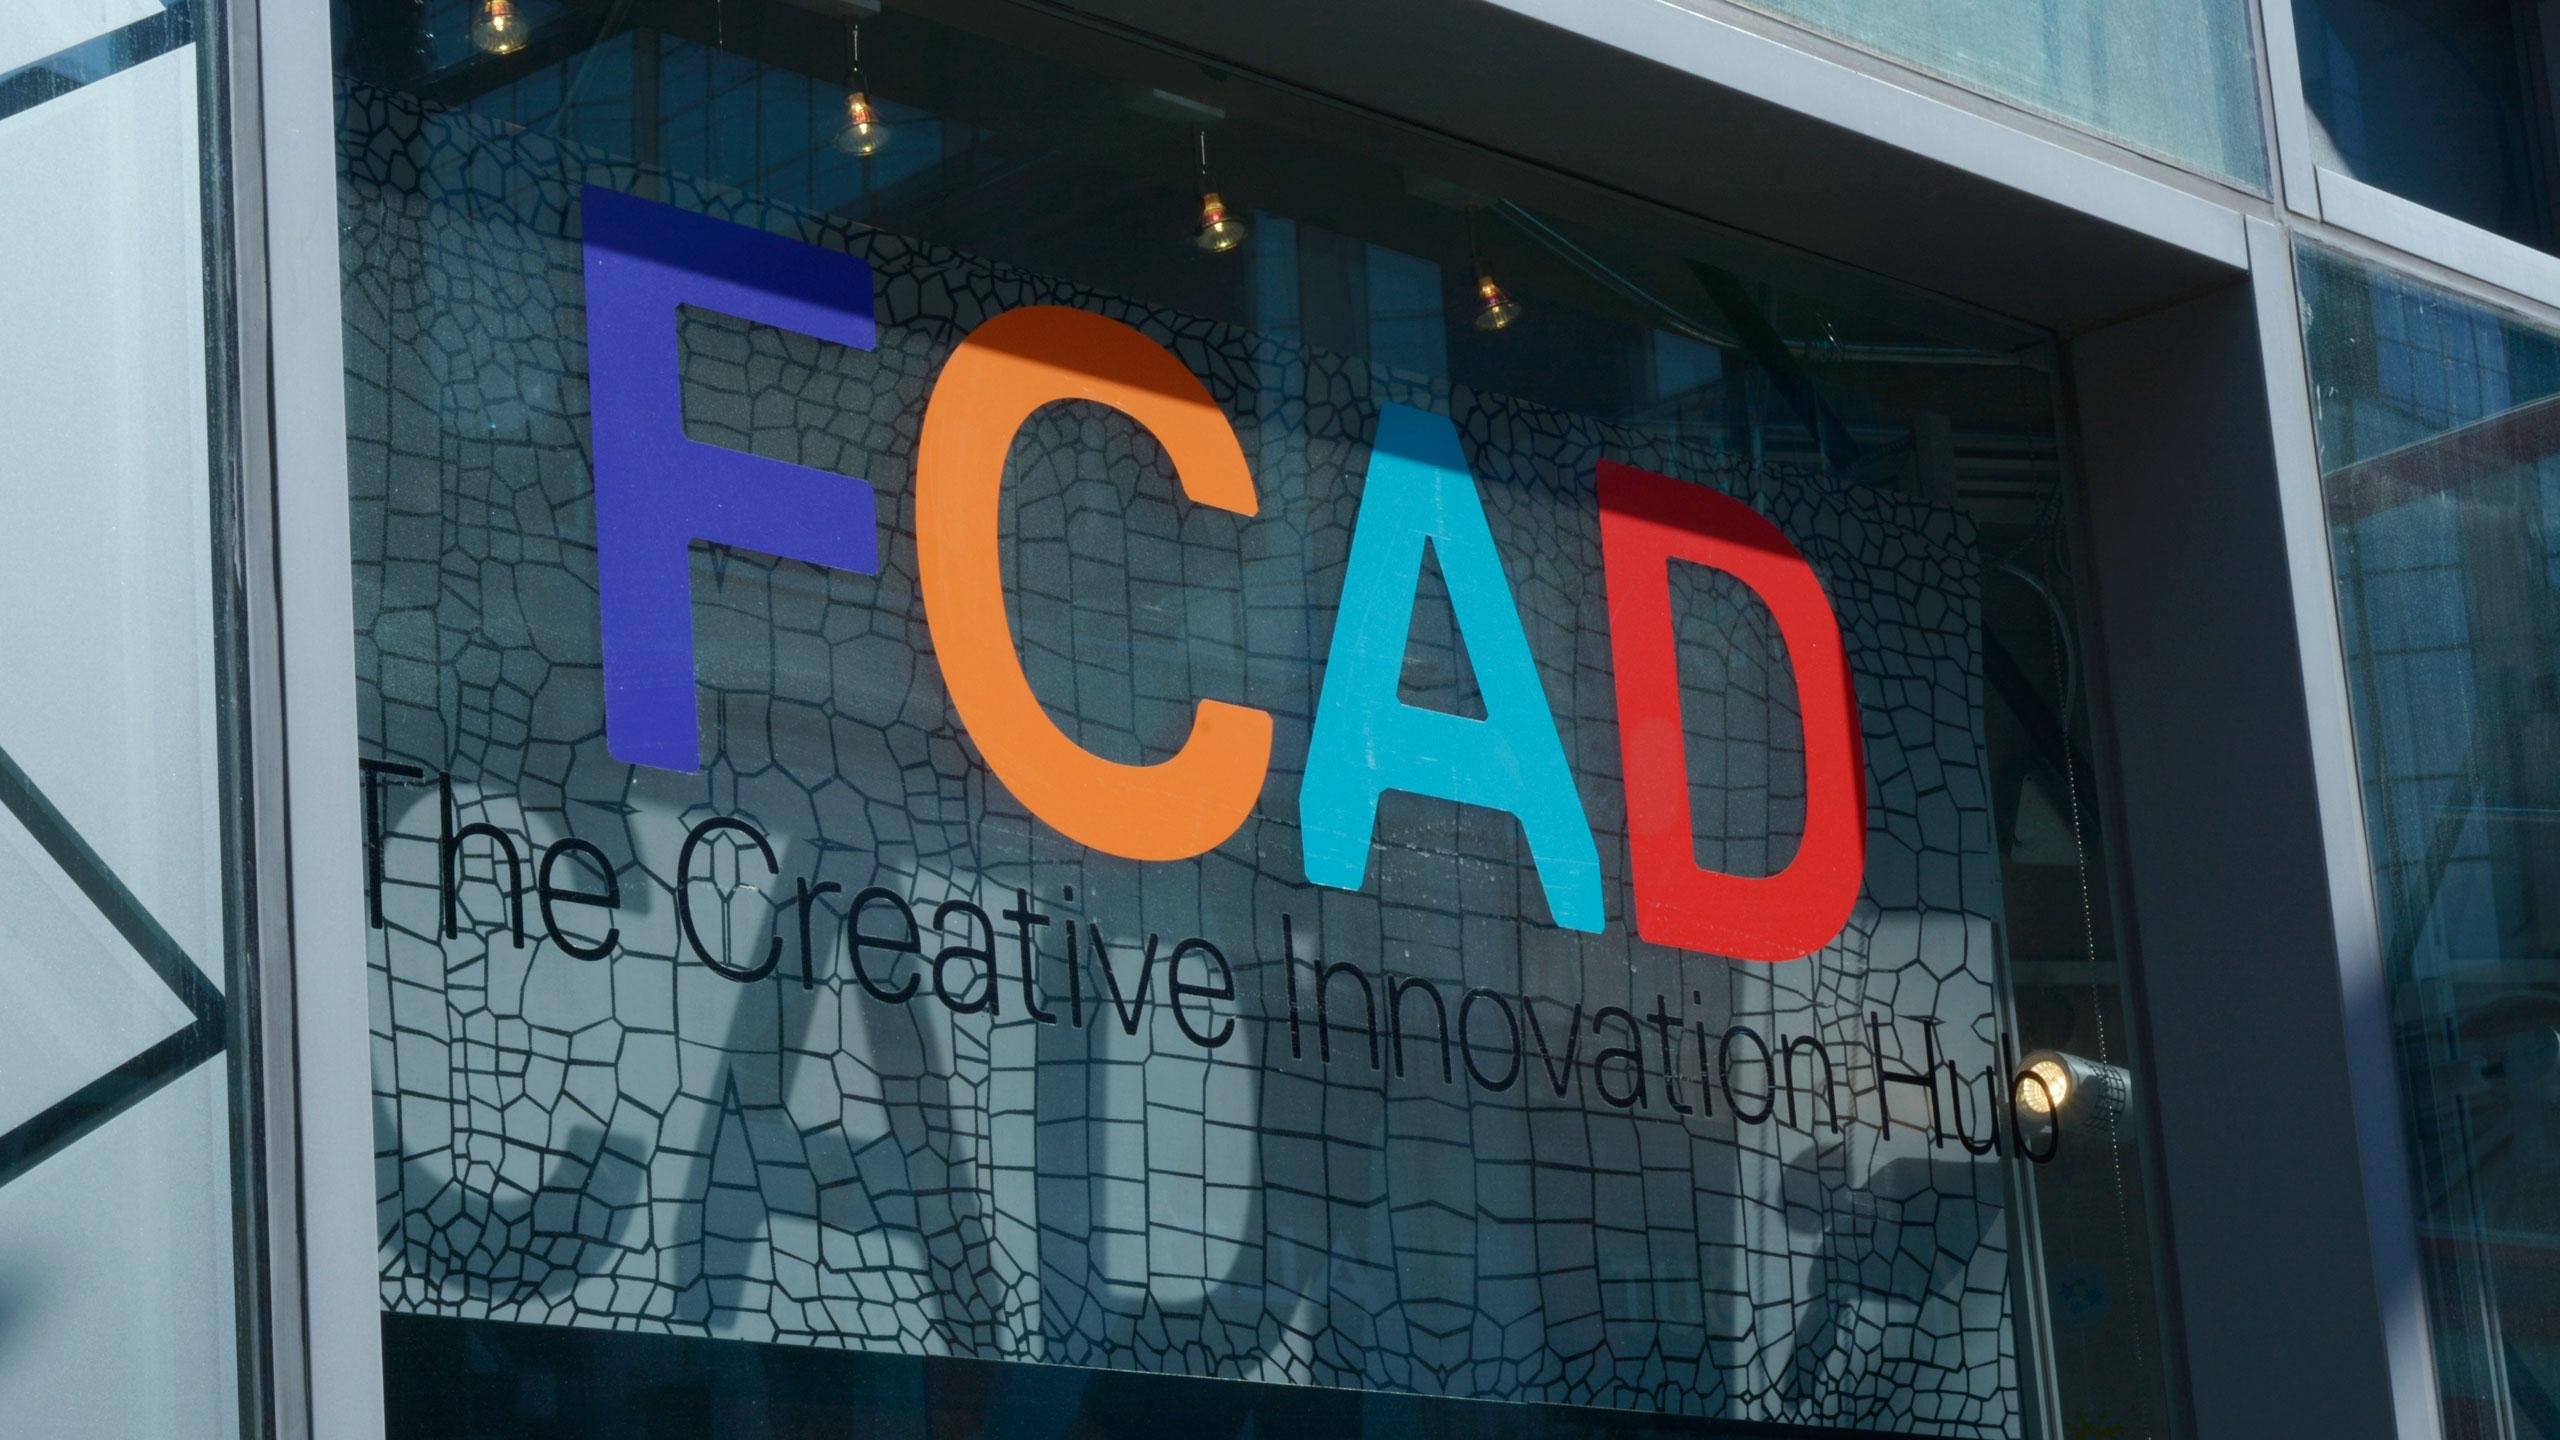 Photo of the FCAD creative innovation hub sign on Yonge Street.